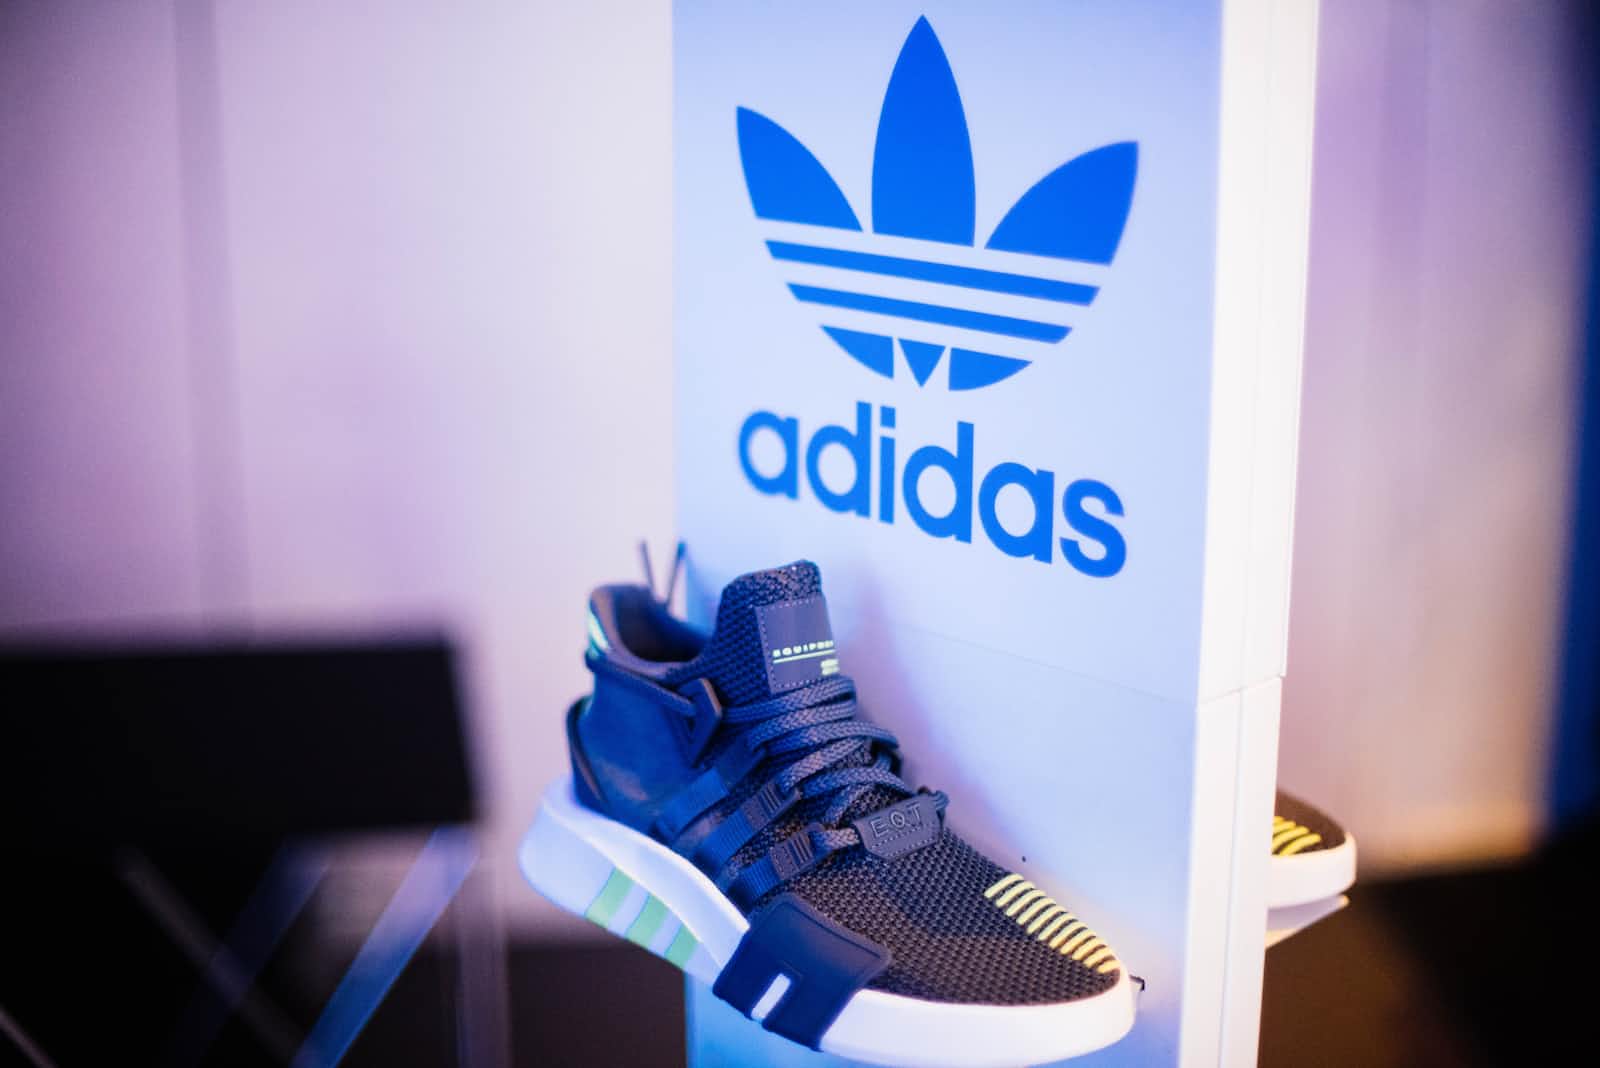 Adidas logo above an Adidas basketball shoe